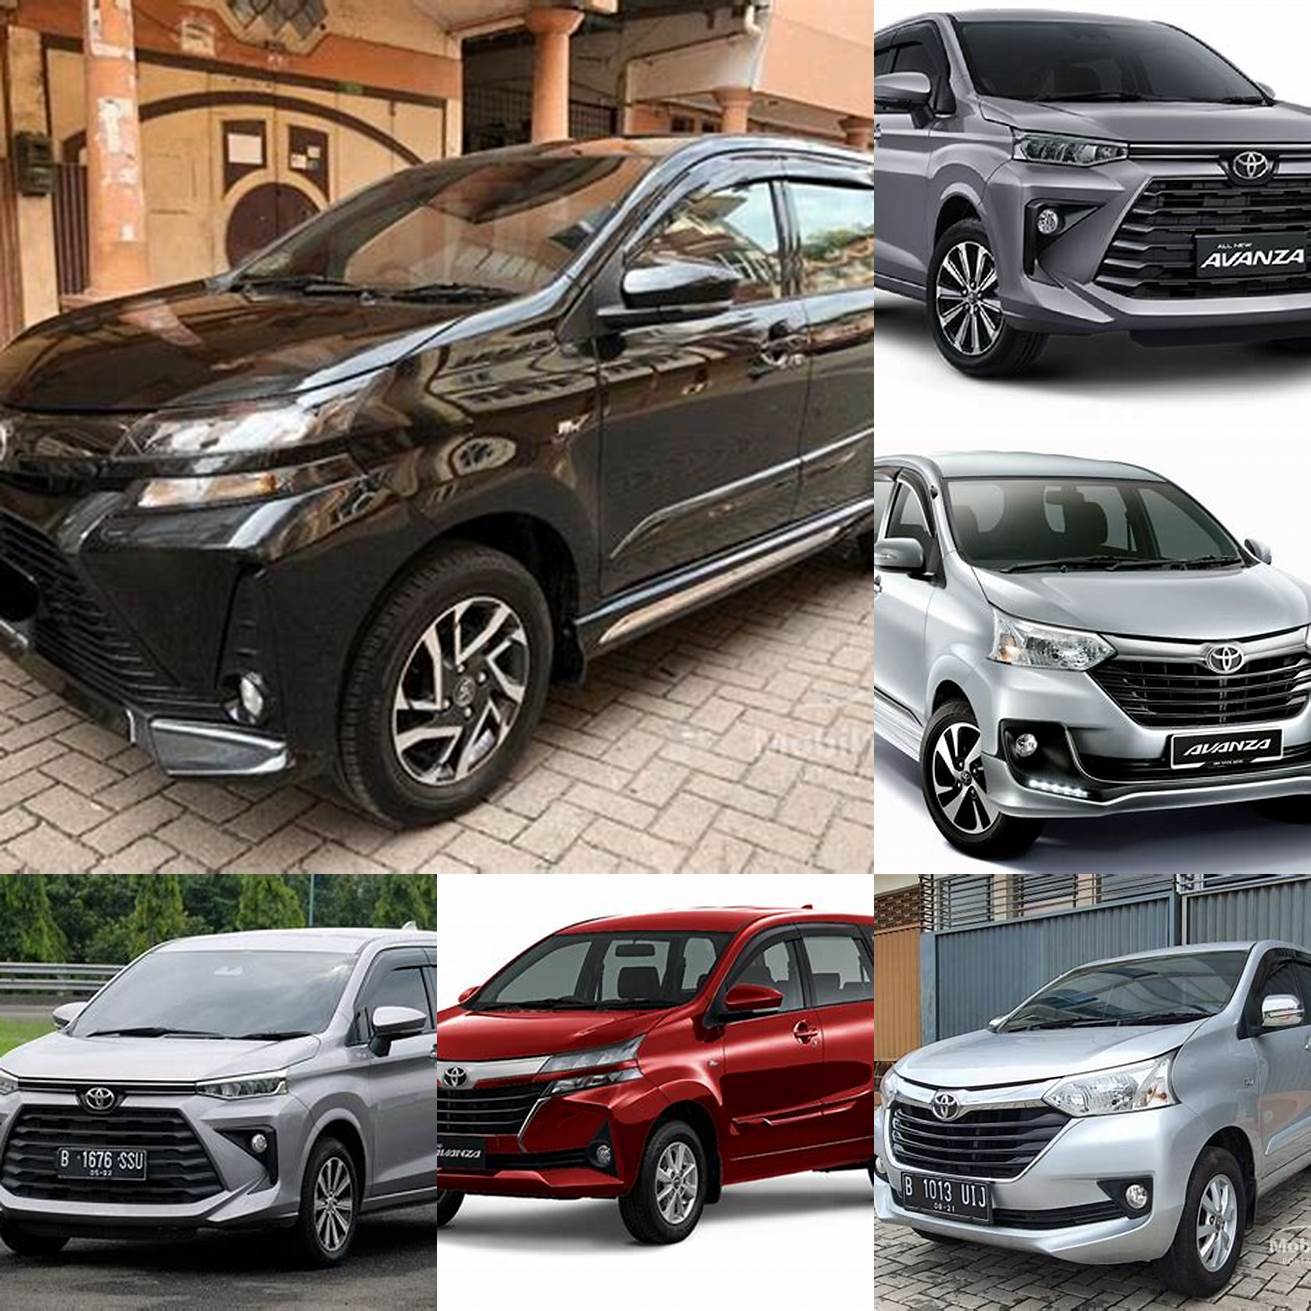 Harga mobil Toyota Avanza di Jakarta Rp 170 juta - Rp 240 juta